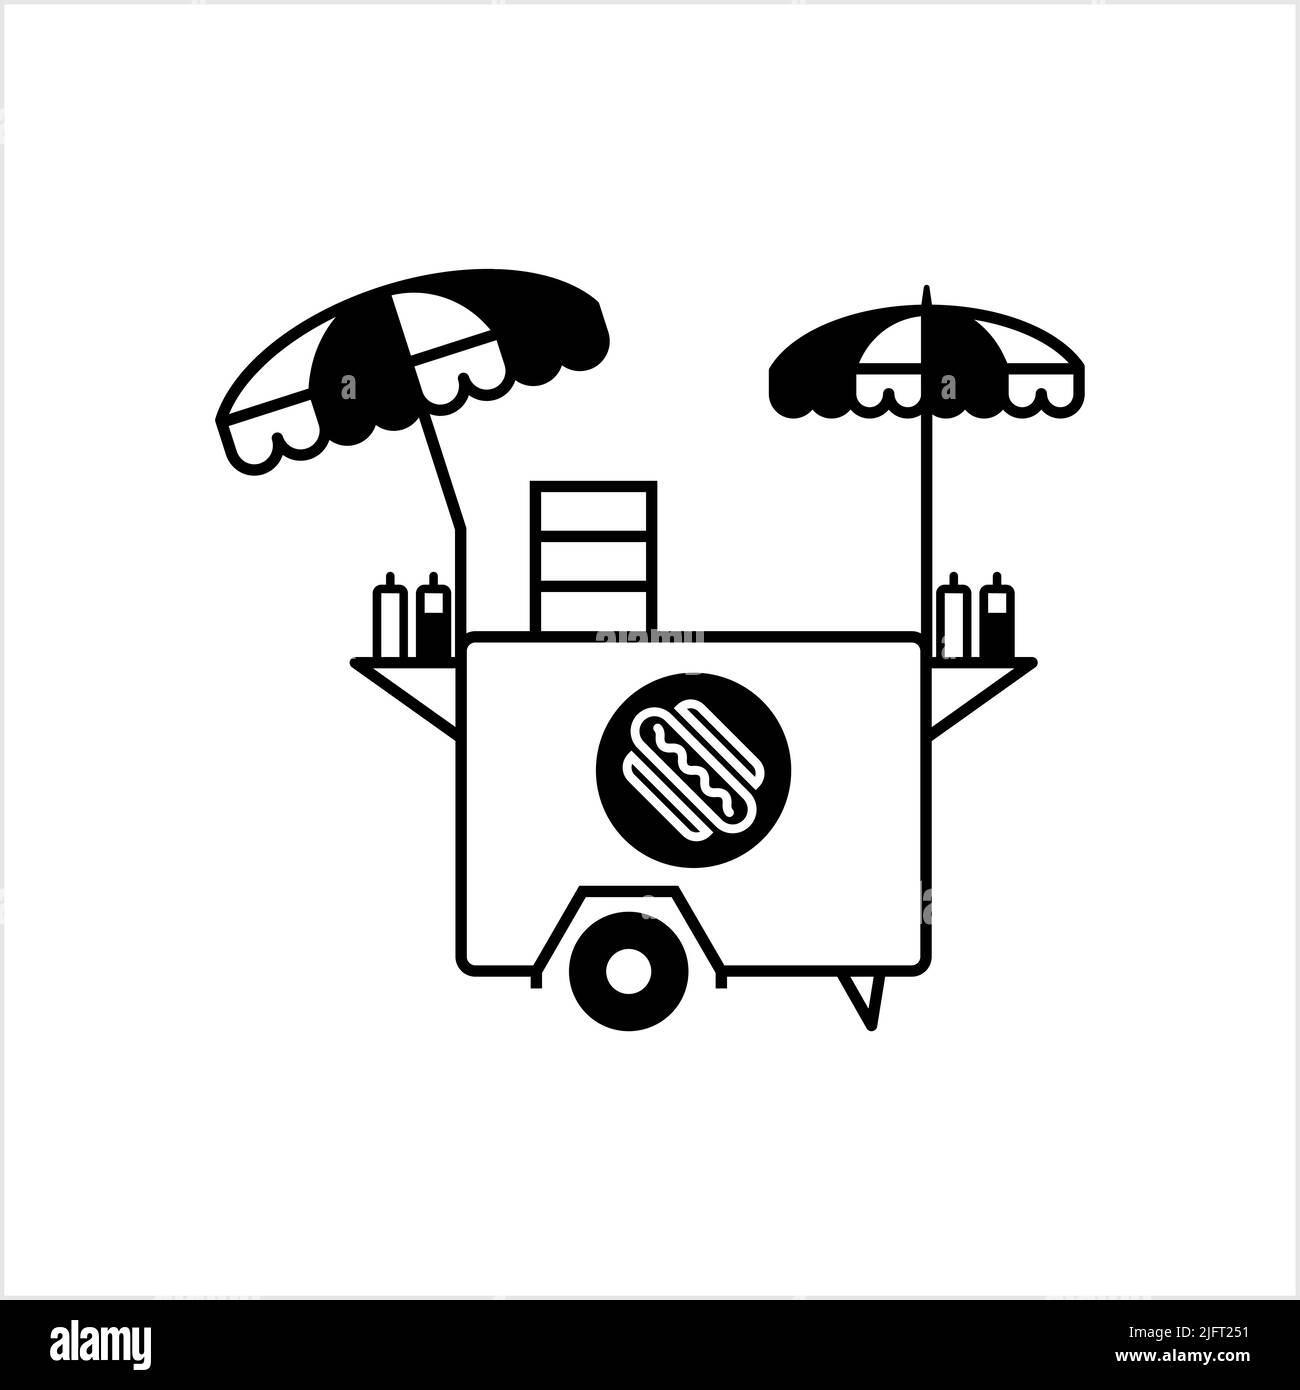 Street Food Vending Cart Hot Dogs, Fast Food Hot Dog Cart icona Vector Art Illustrazione Illustrazione Vettoriale